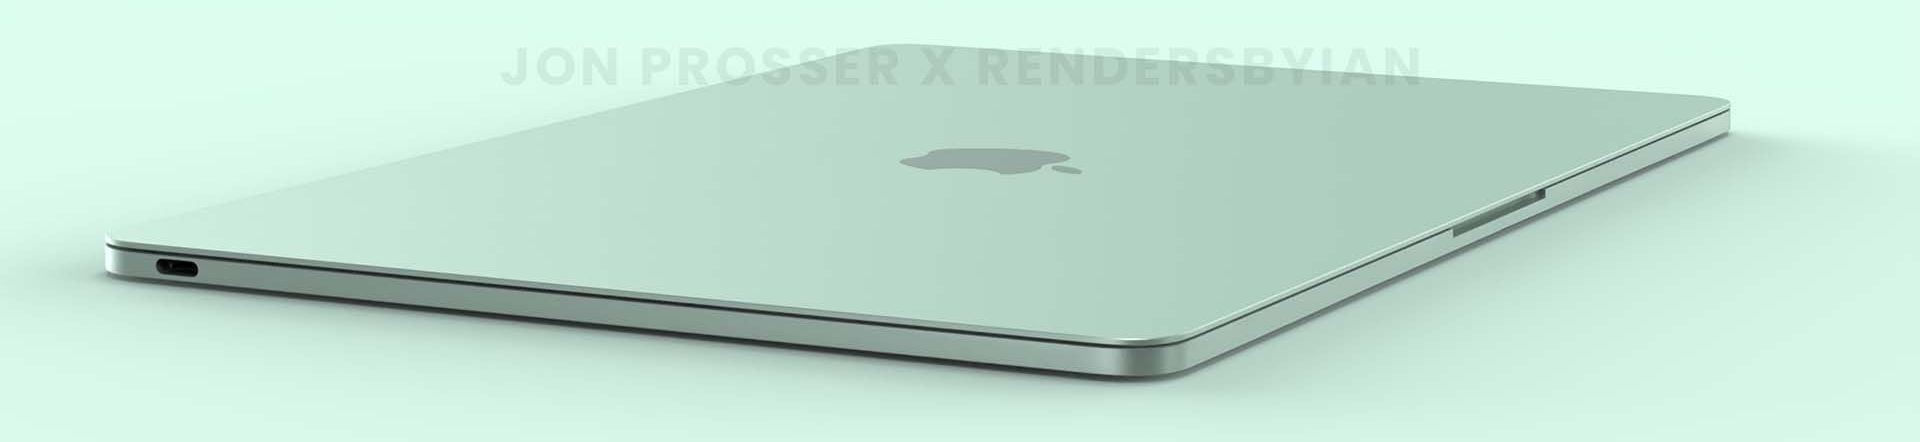 MacBook Air 2022 Concept